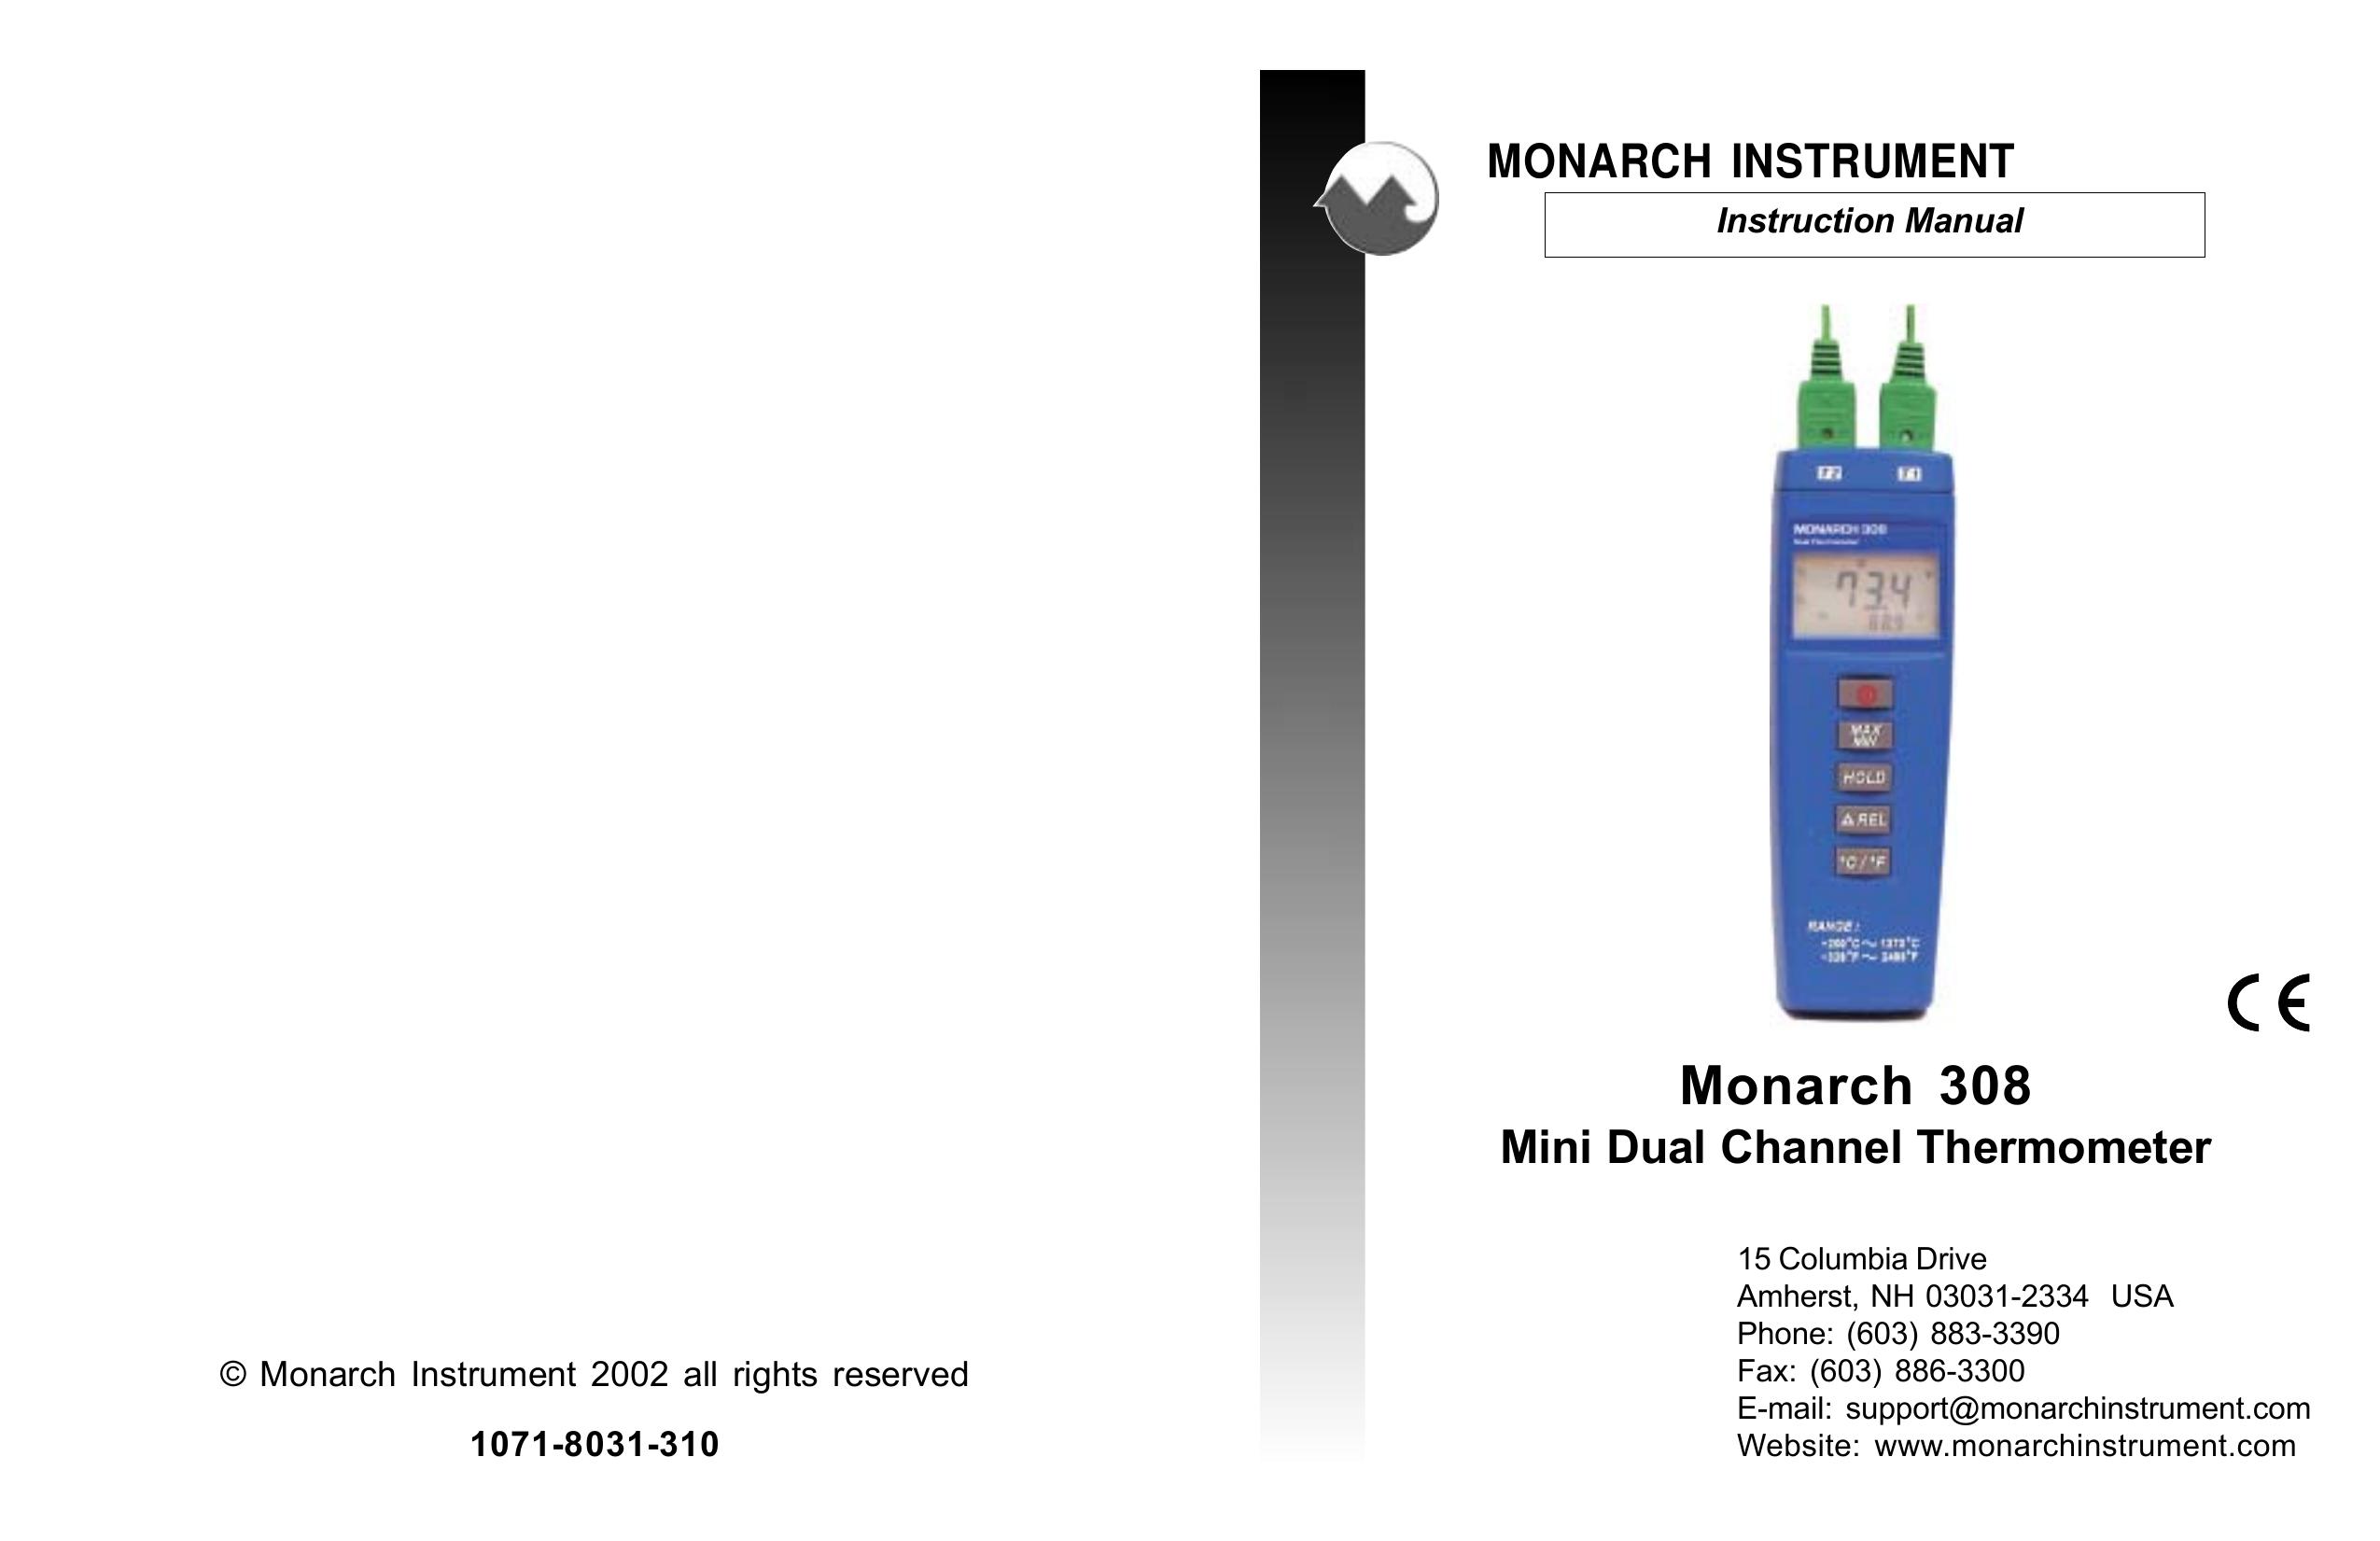 Monarch MONARCH 308 Thermometer User Manual